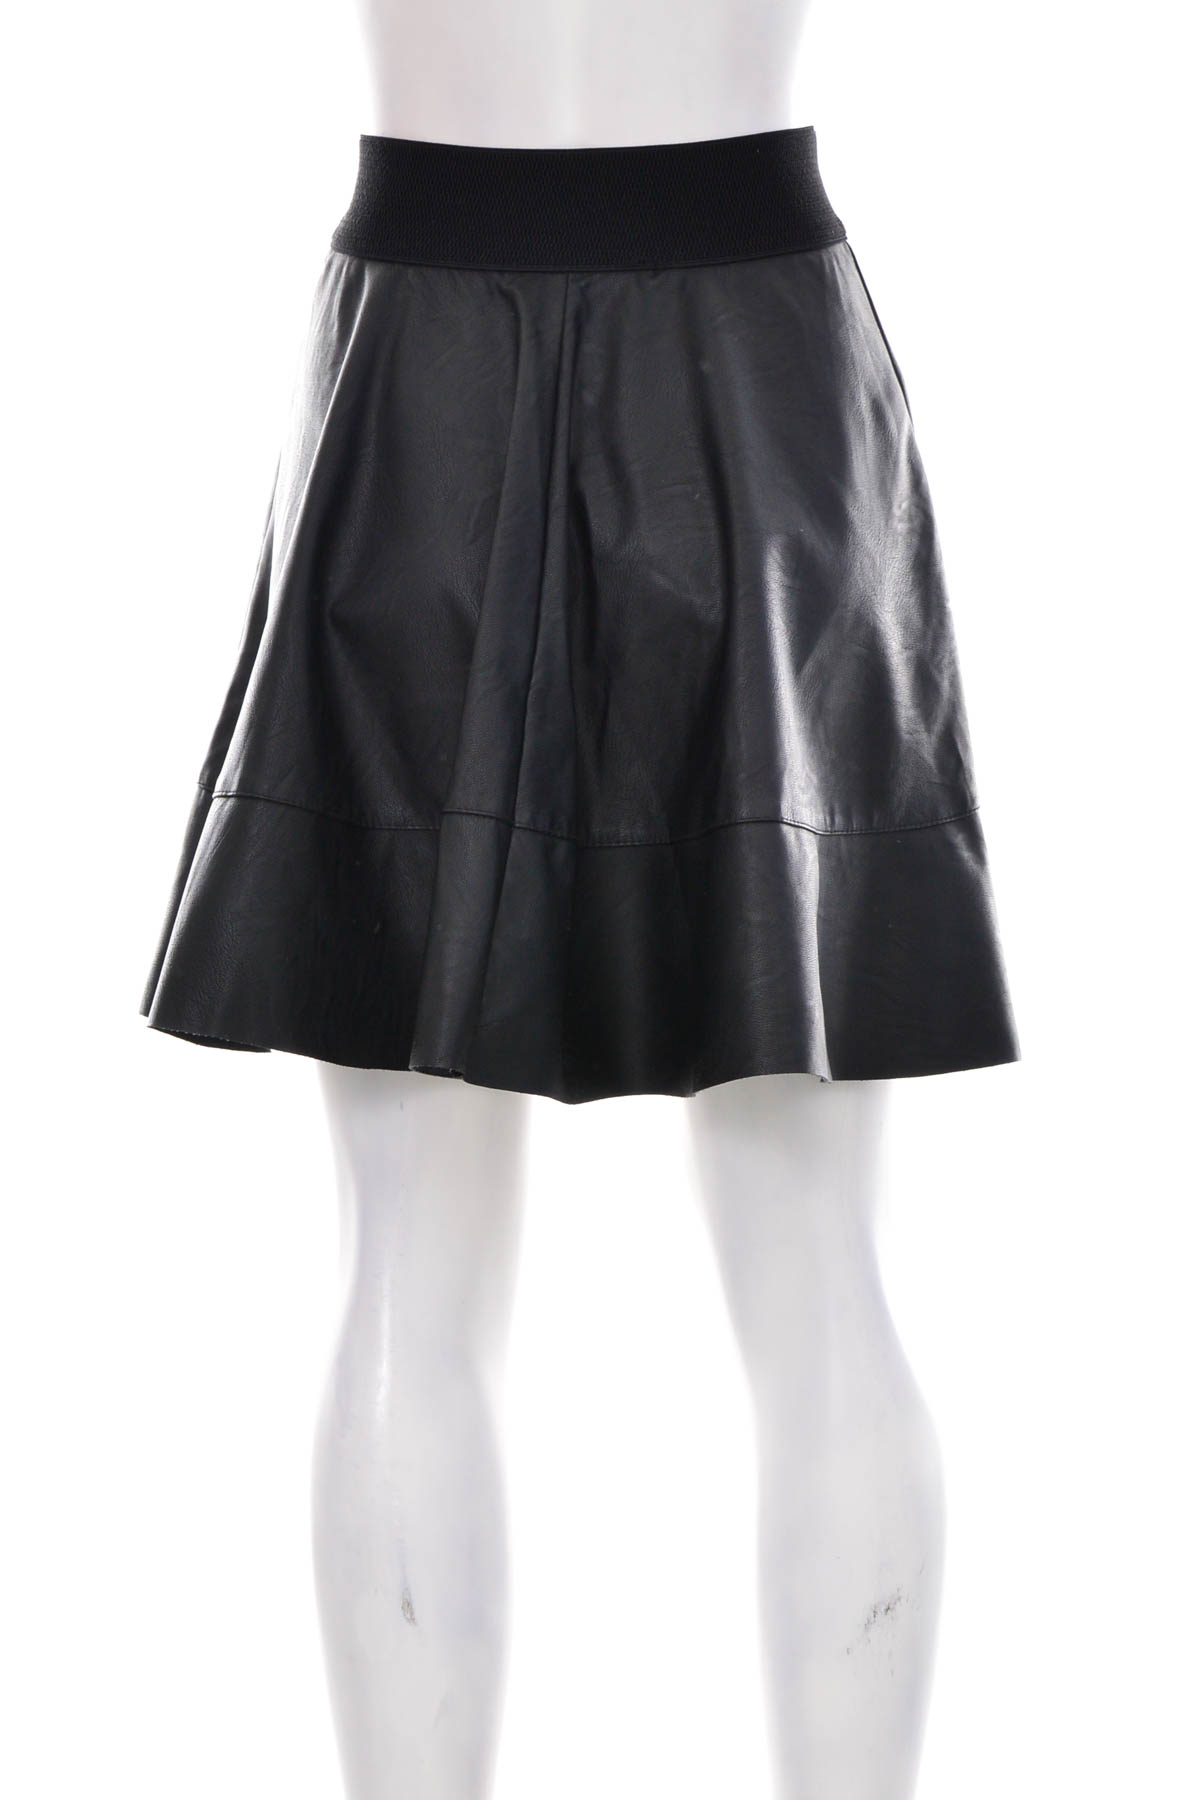 Leather skirt - SassyClassy - 1